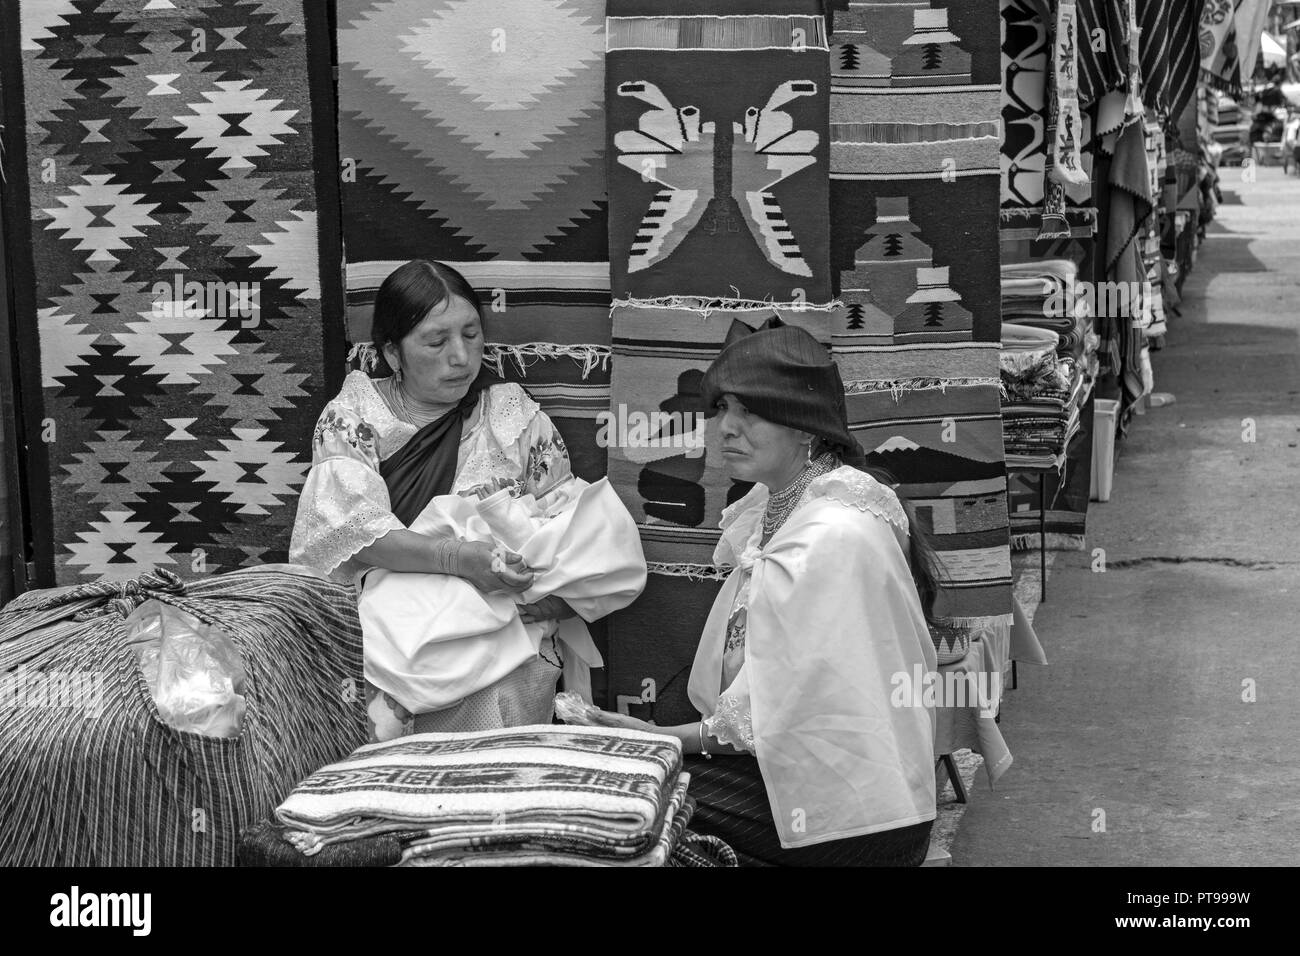 Otavalo market Ecuador - clothing + vendor Stock Photo